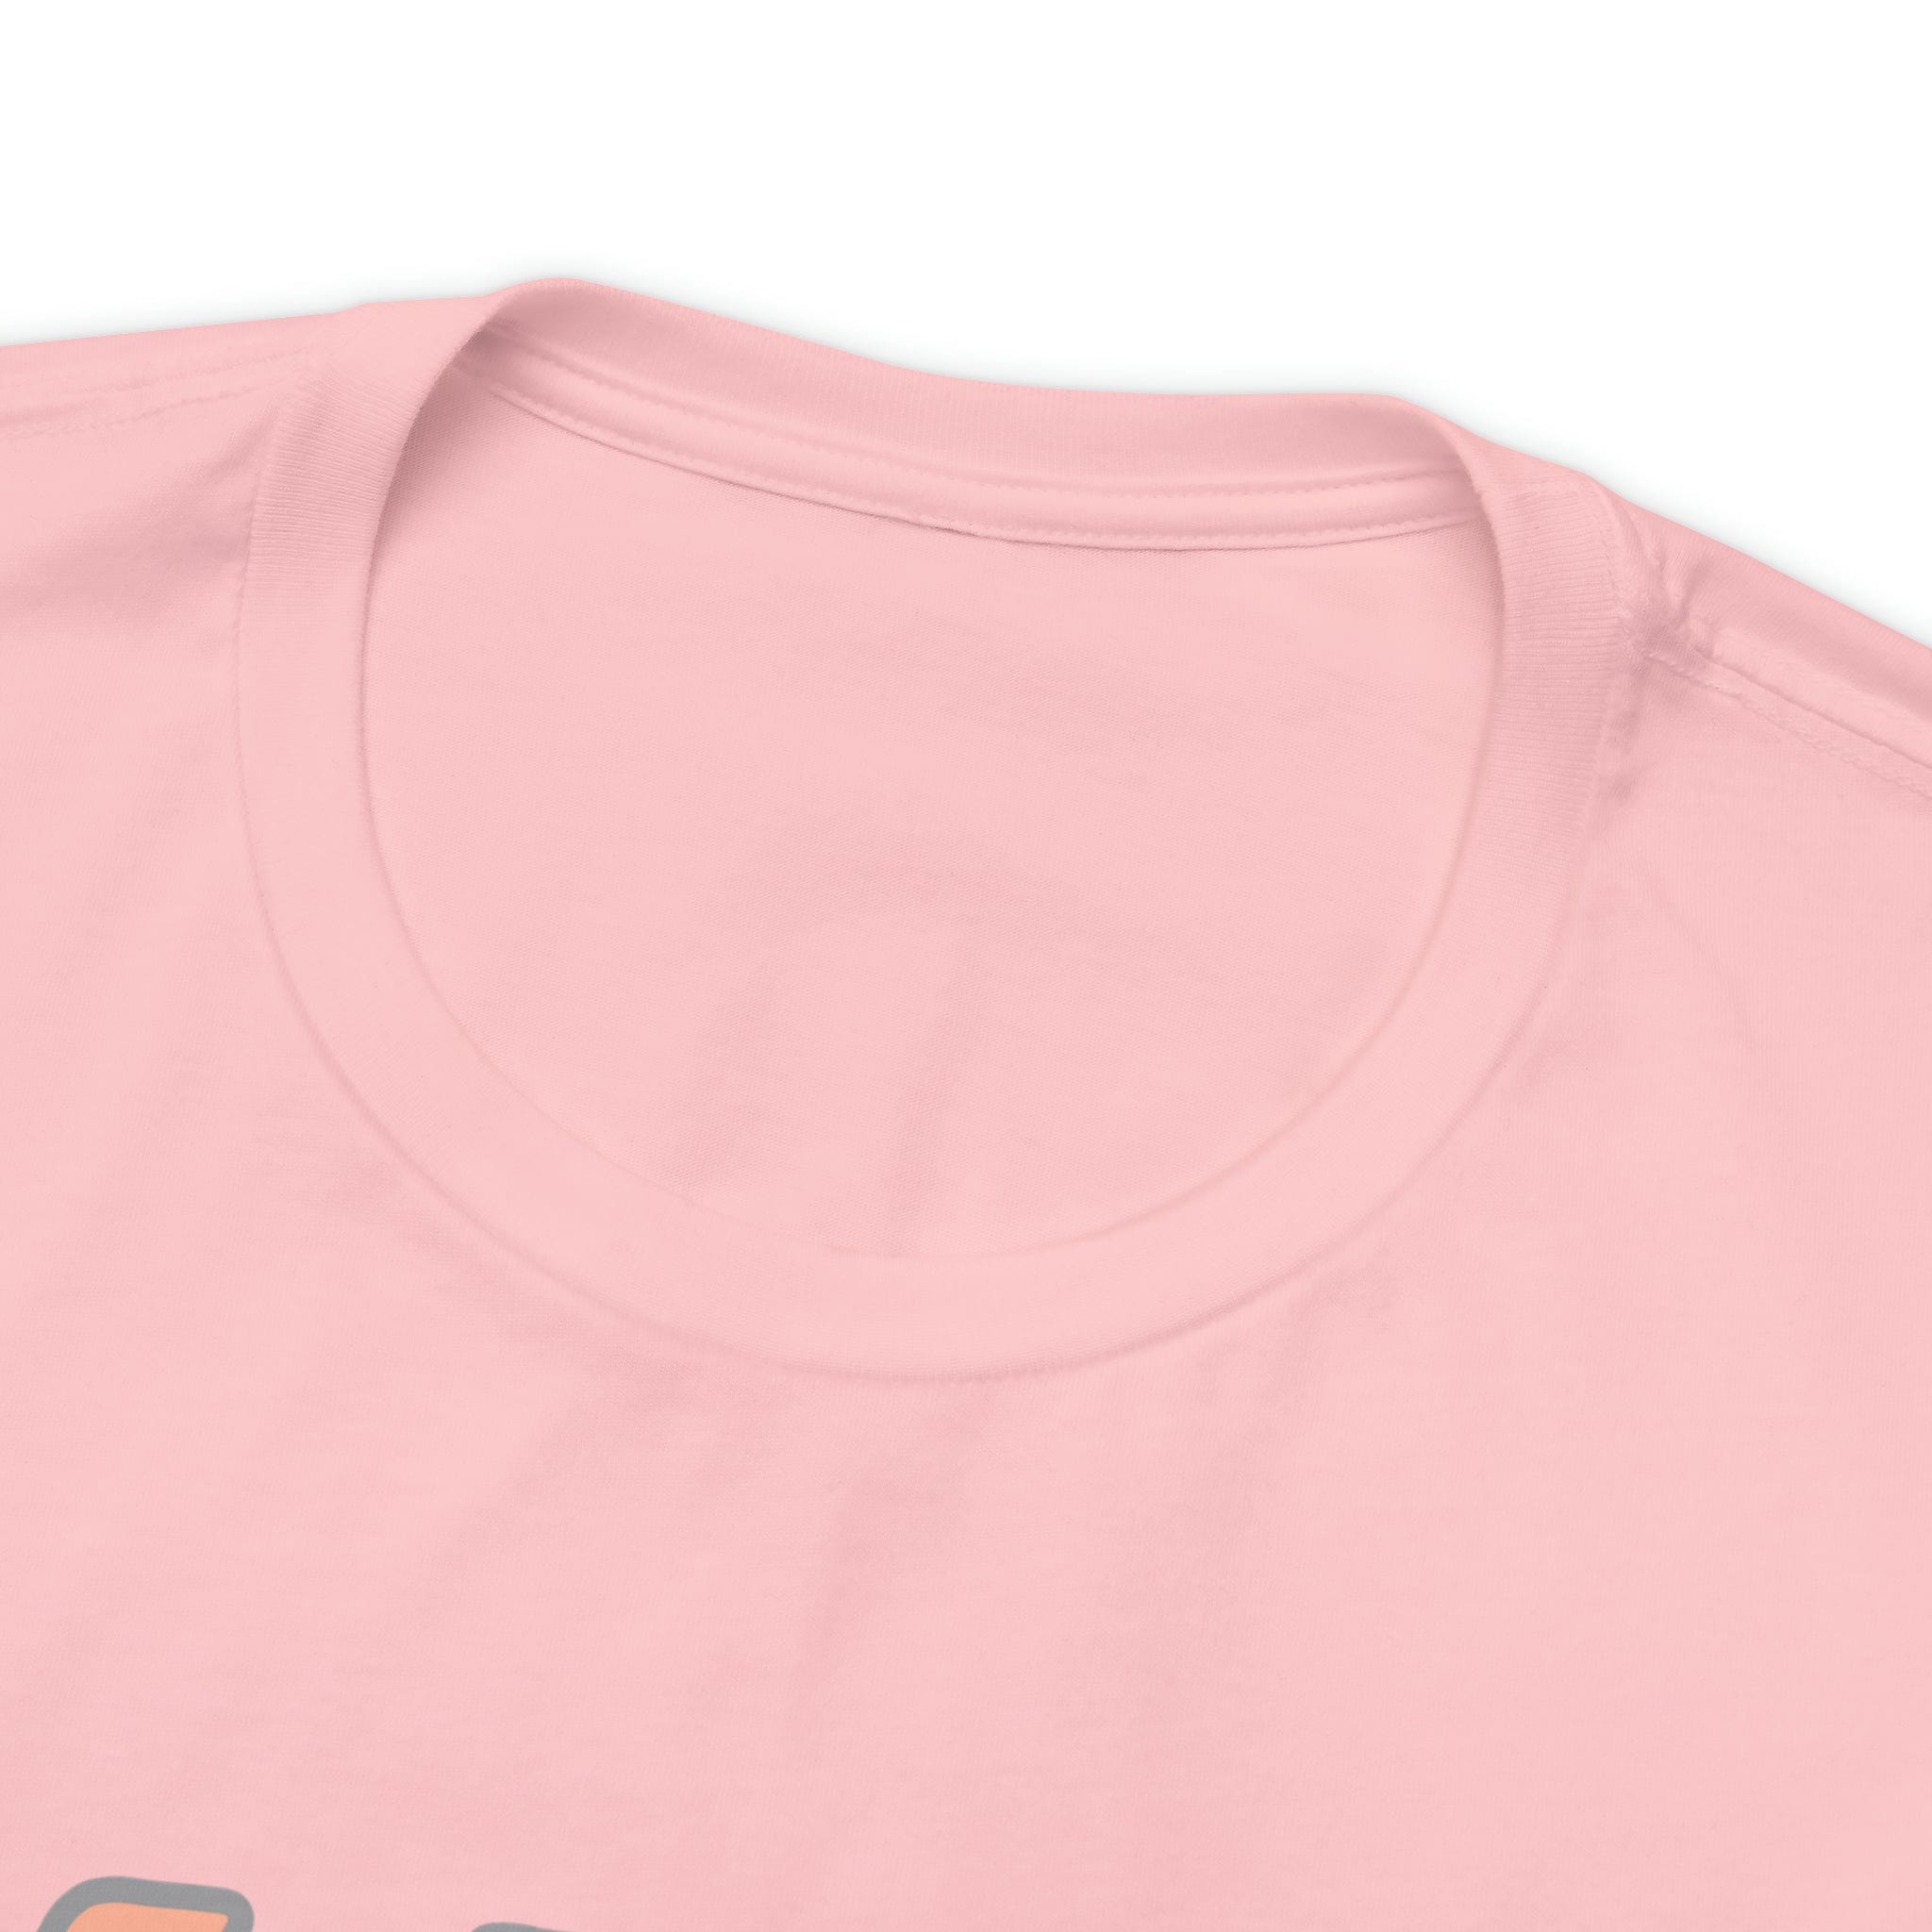 Printify T-Shirt Taking Care Business Mama Gray - Unisex Jersey Short Sleeve Tee